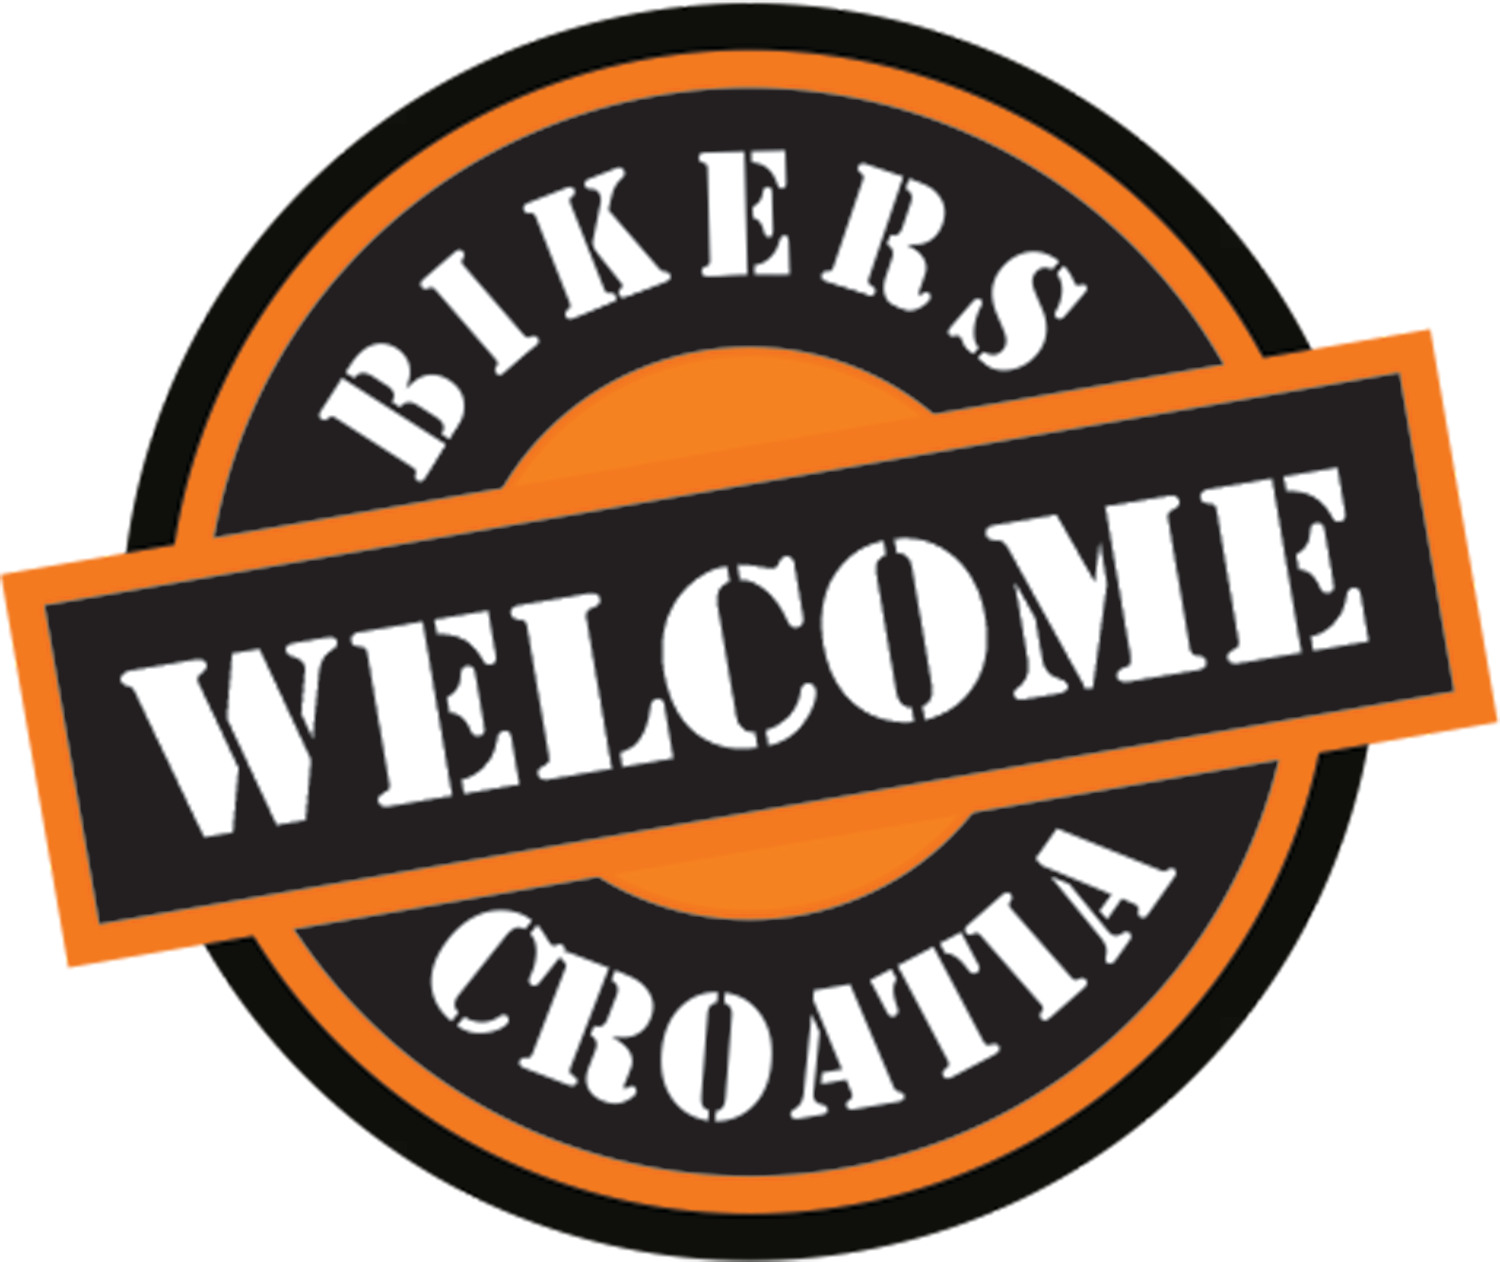 bikers place welcome croatia